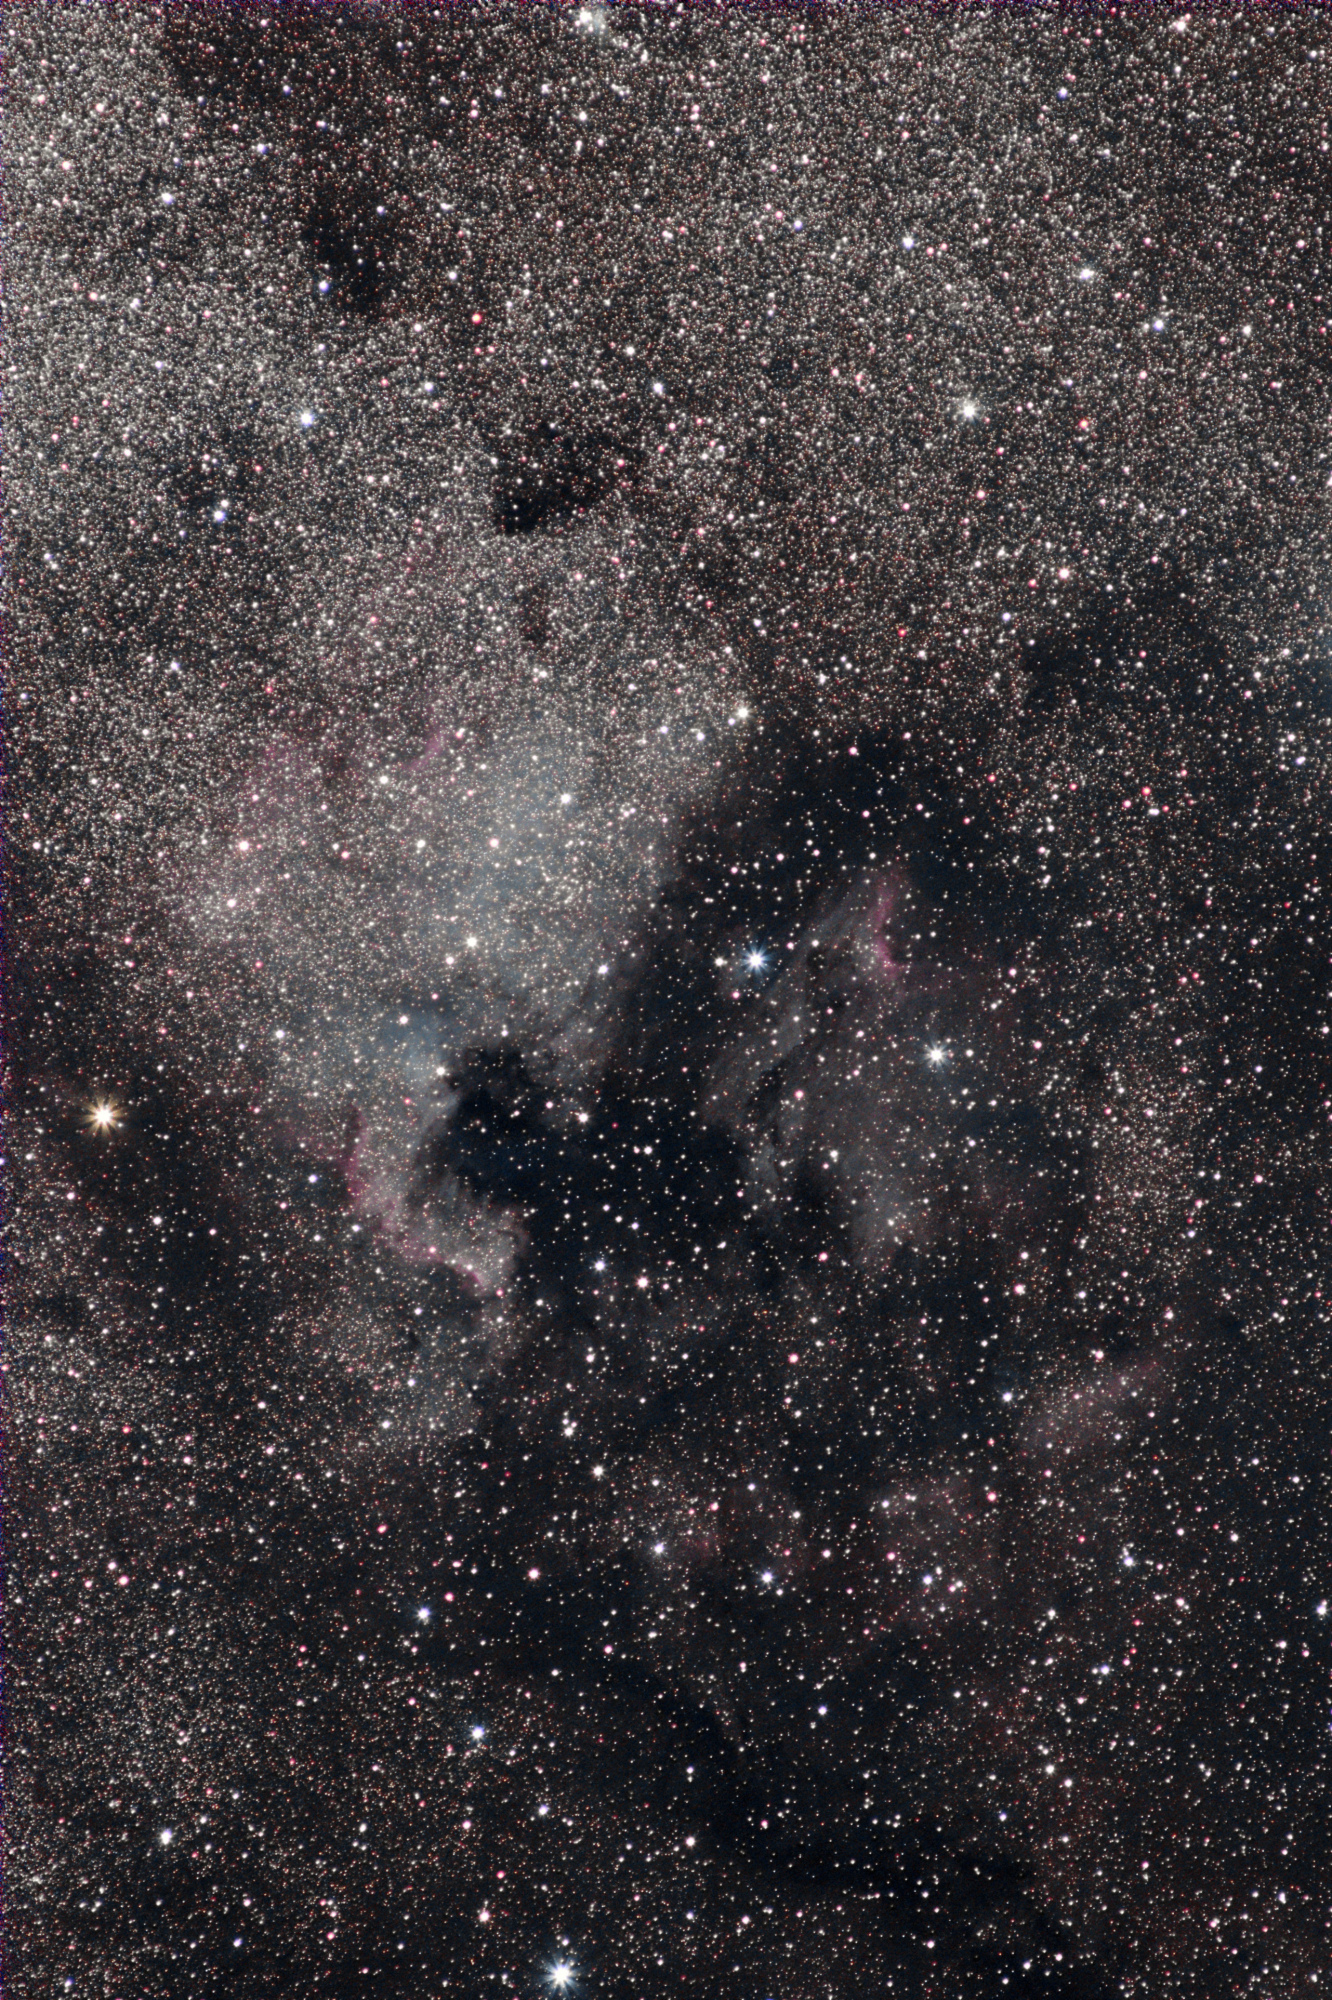 r_proc_NGC7000_Tele200mm_03min_Stud_Rot90_photom_Green_Asinh_Histo_6Arcsec_Pixel_comp.thumb.jpg.aeda1af24377cc588406bcd5fb8d7568.jpg